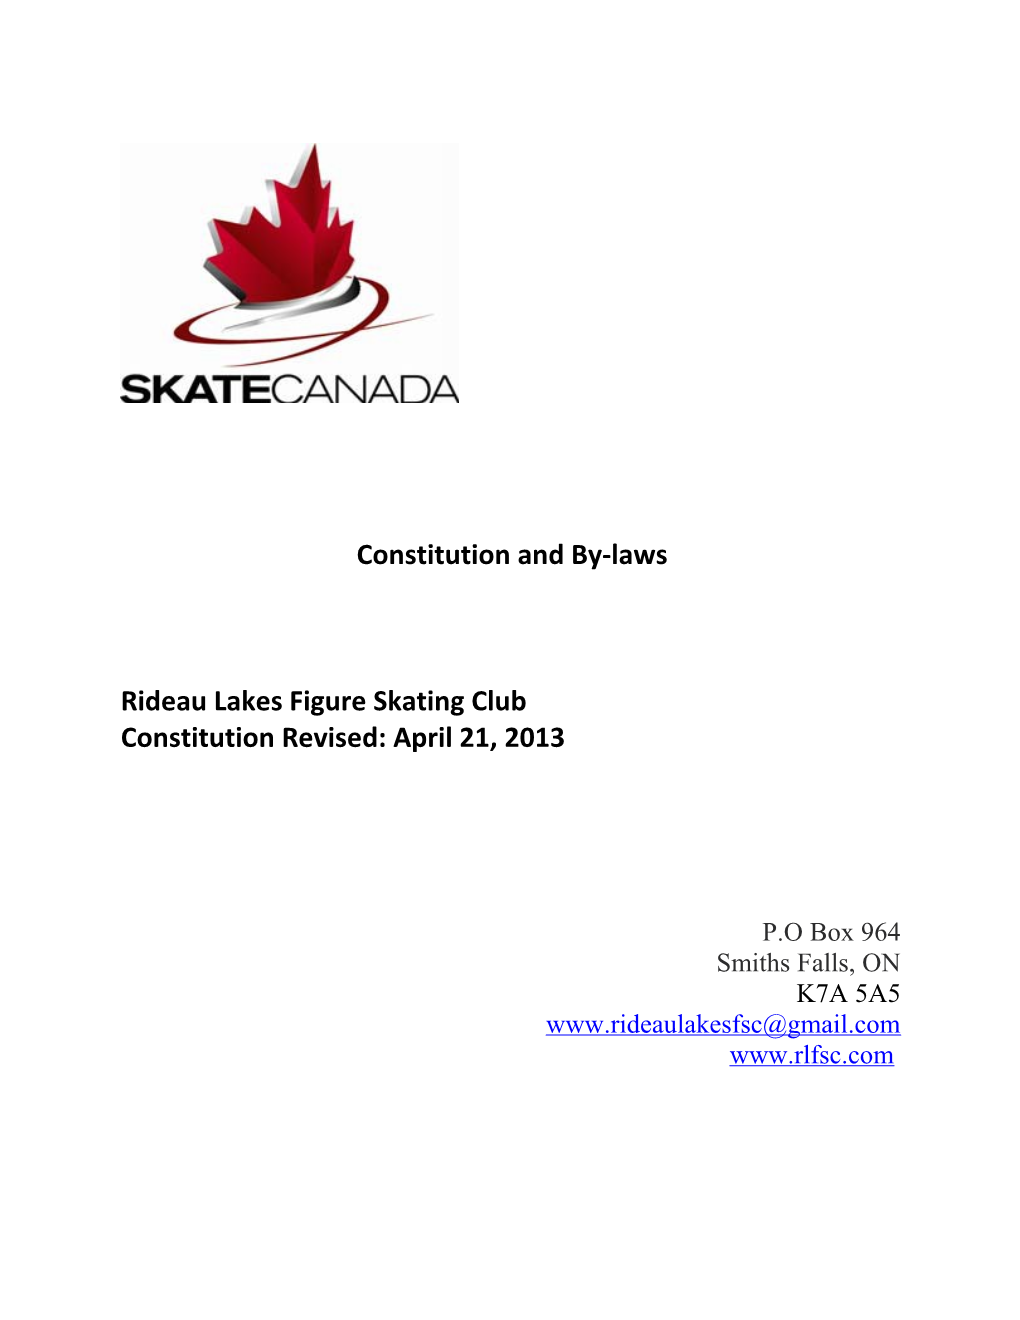 Rideau Lakes Figure Skating Club